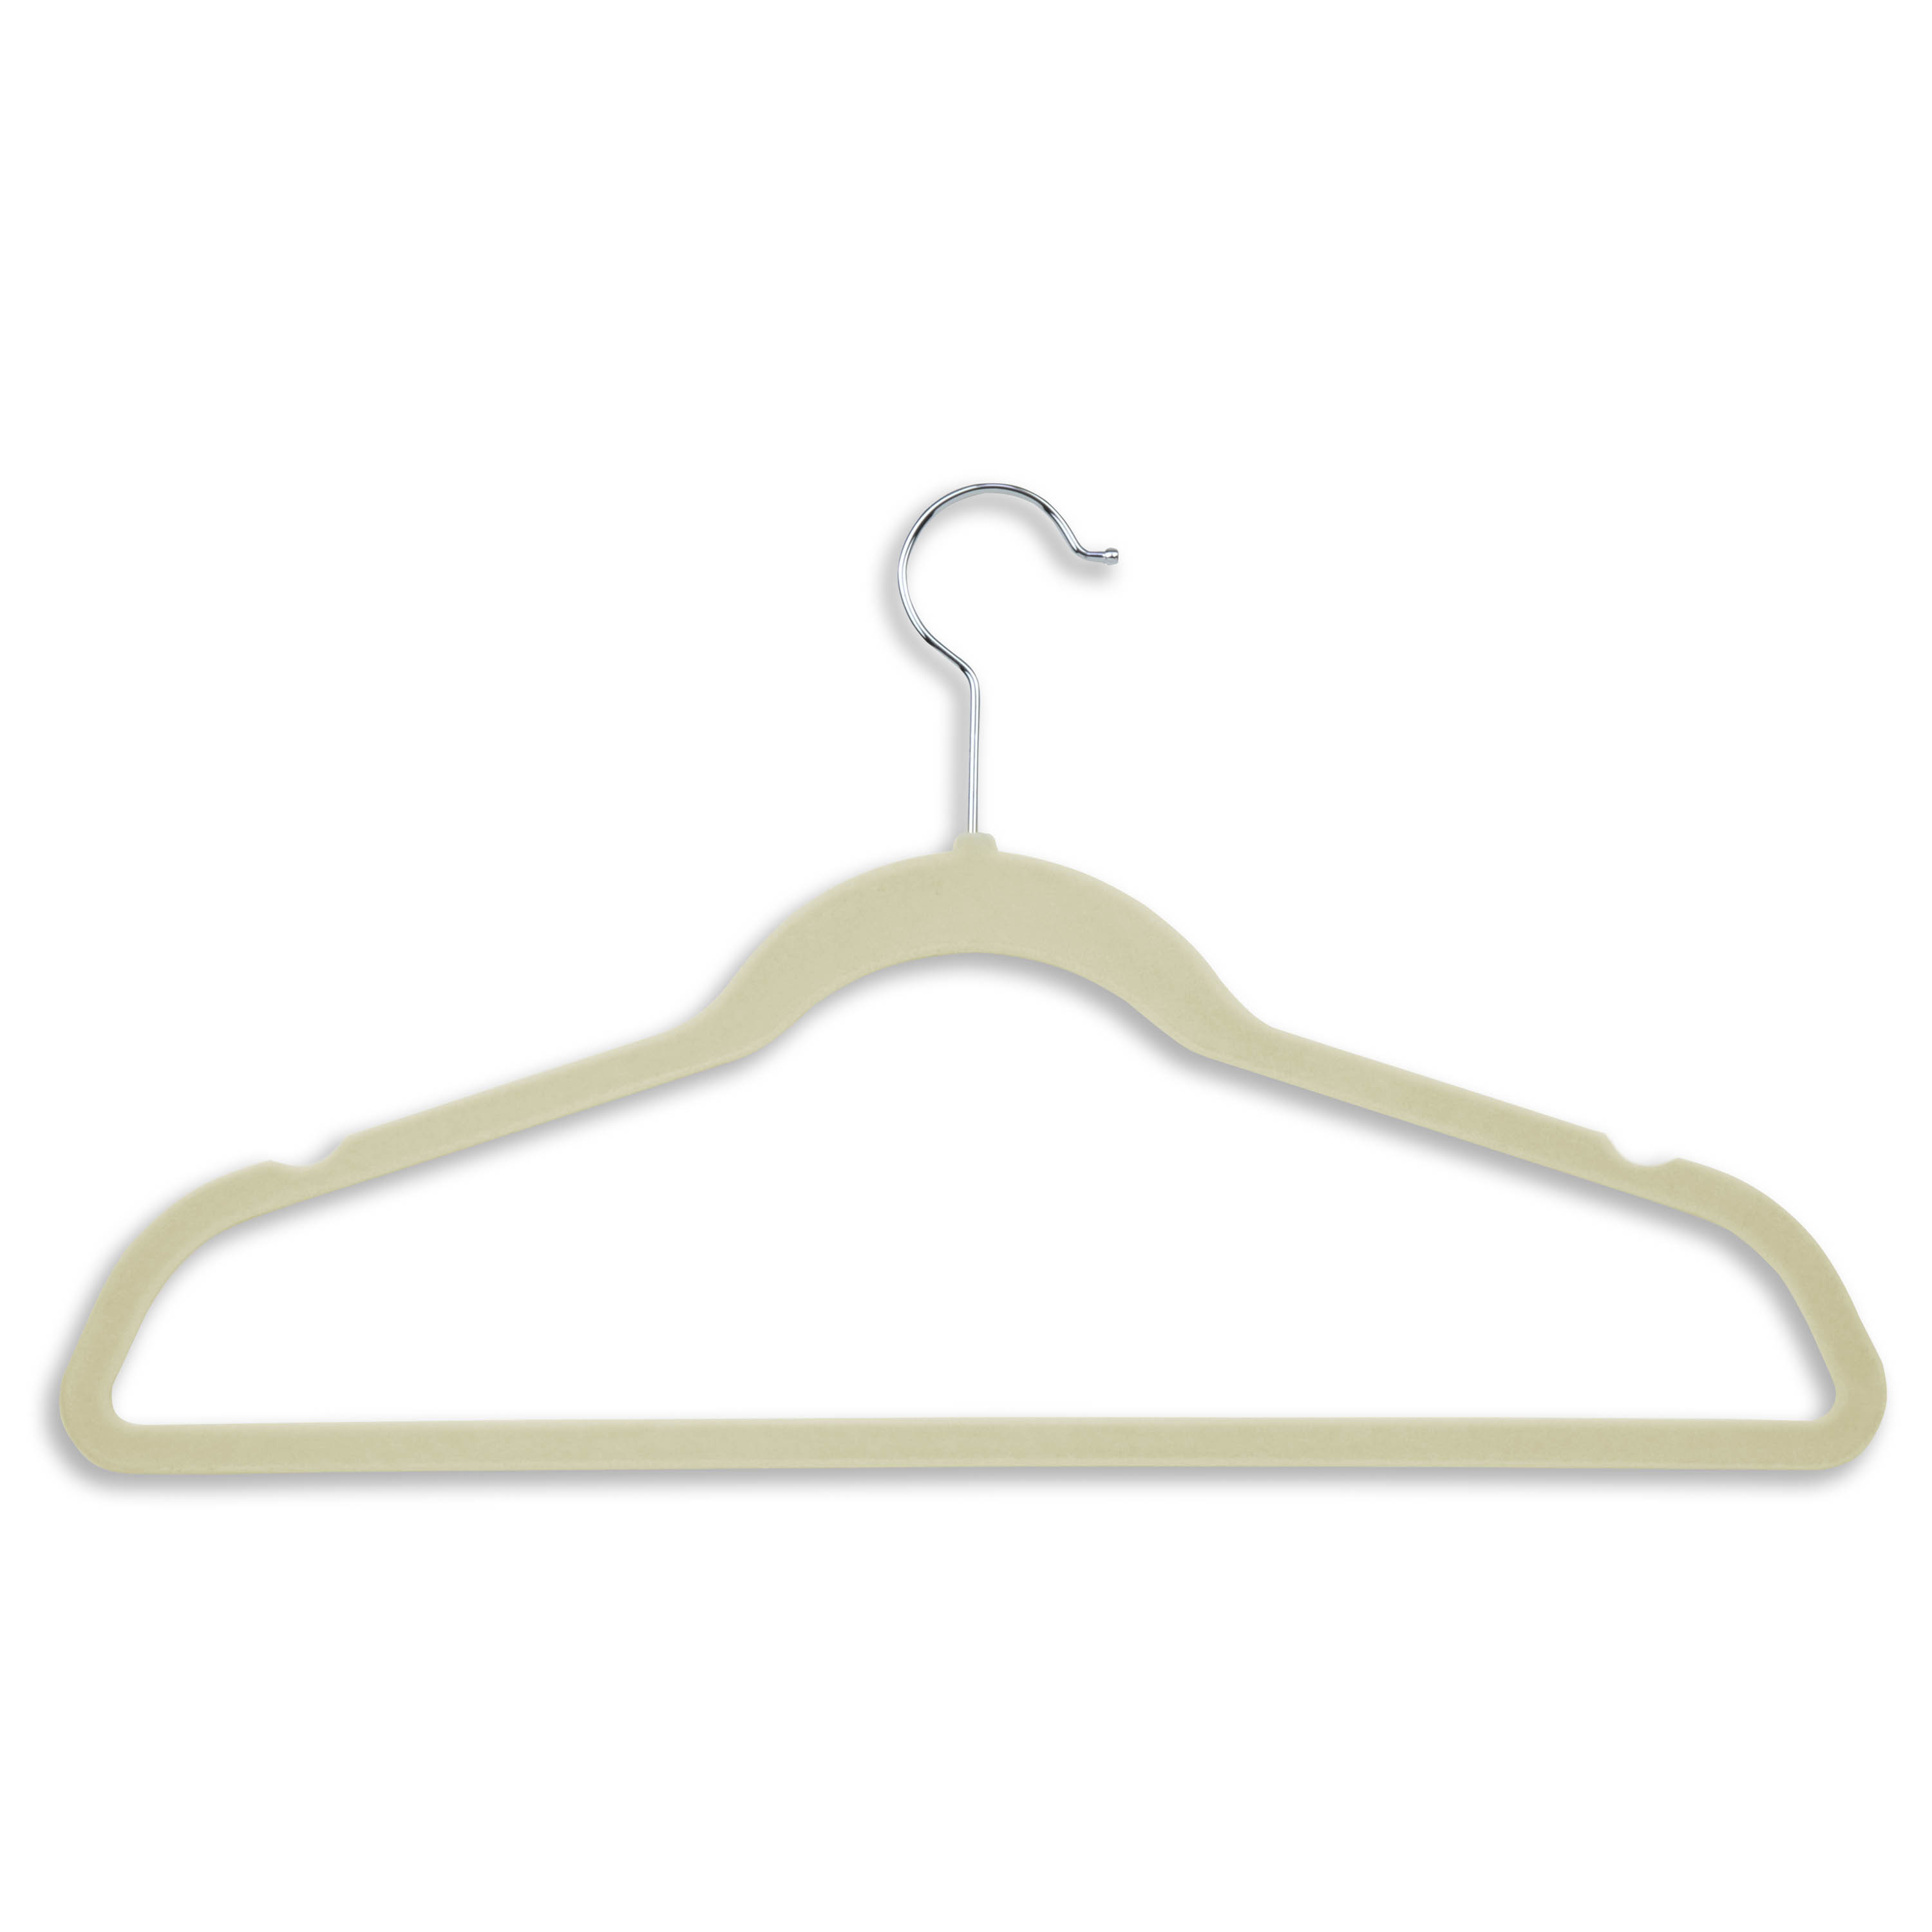 Honey-Can-Do Velvet Touch Suit Hanger, Multicolor (Pack of 50) - image 1 of 4